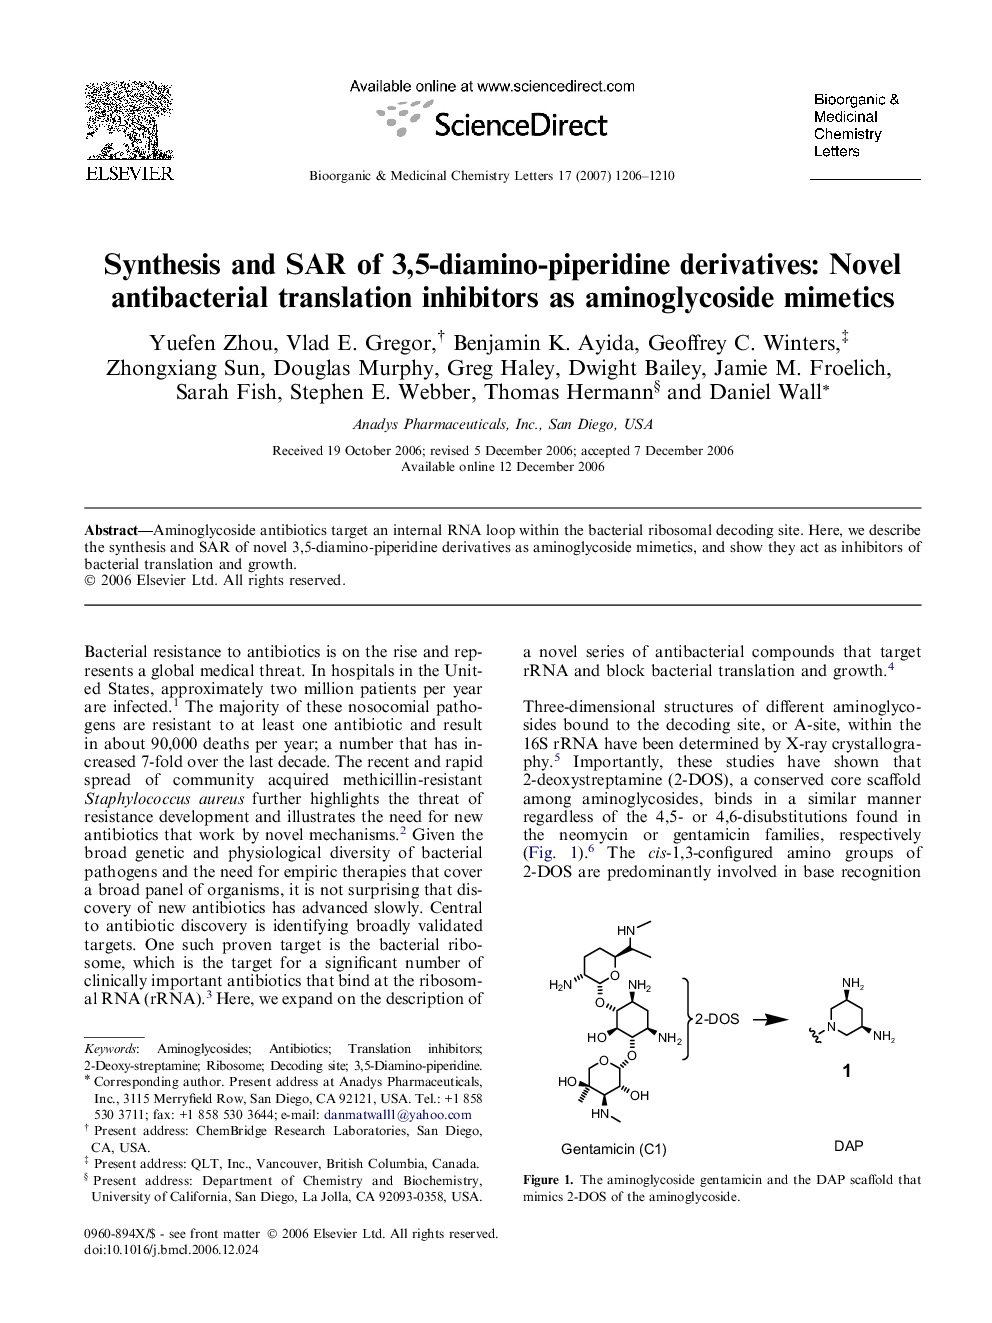 Synthesis and SAR of 3,5-diamino-piperidine derivatives: Novel antibacterial translation inhibitors as aminoglycoside mimetics